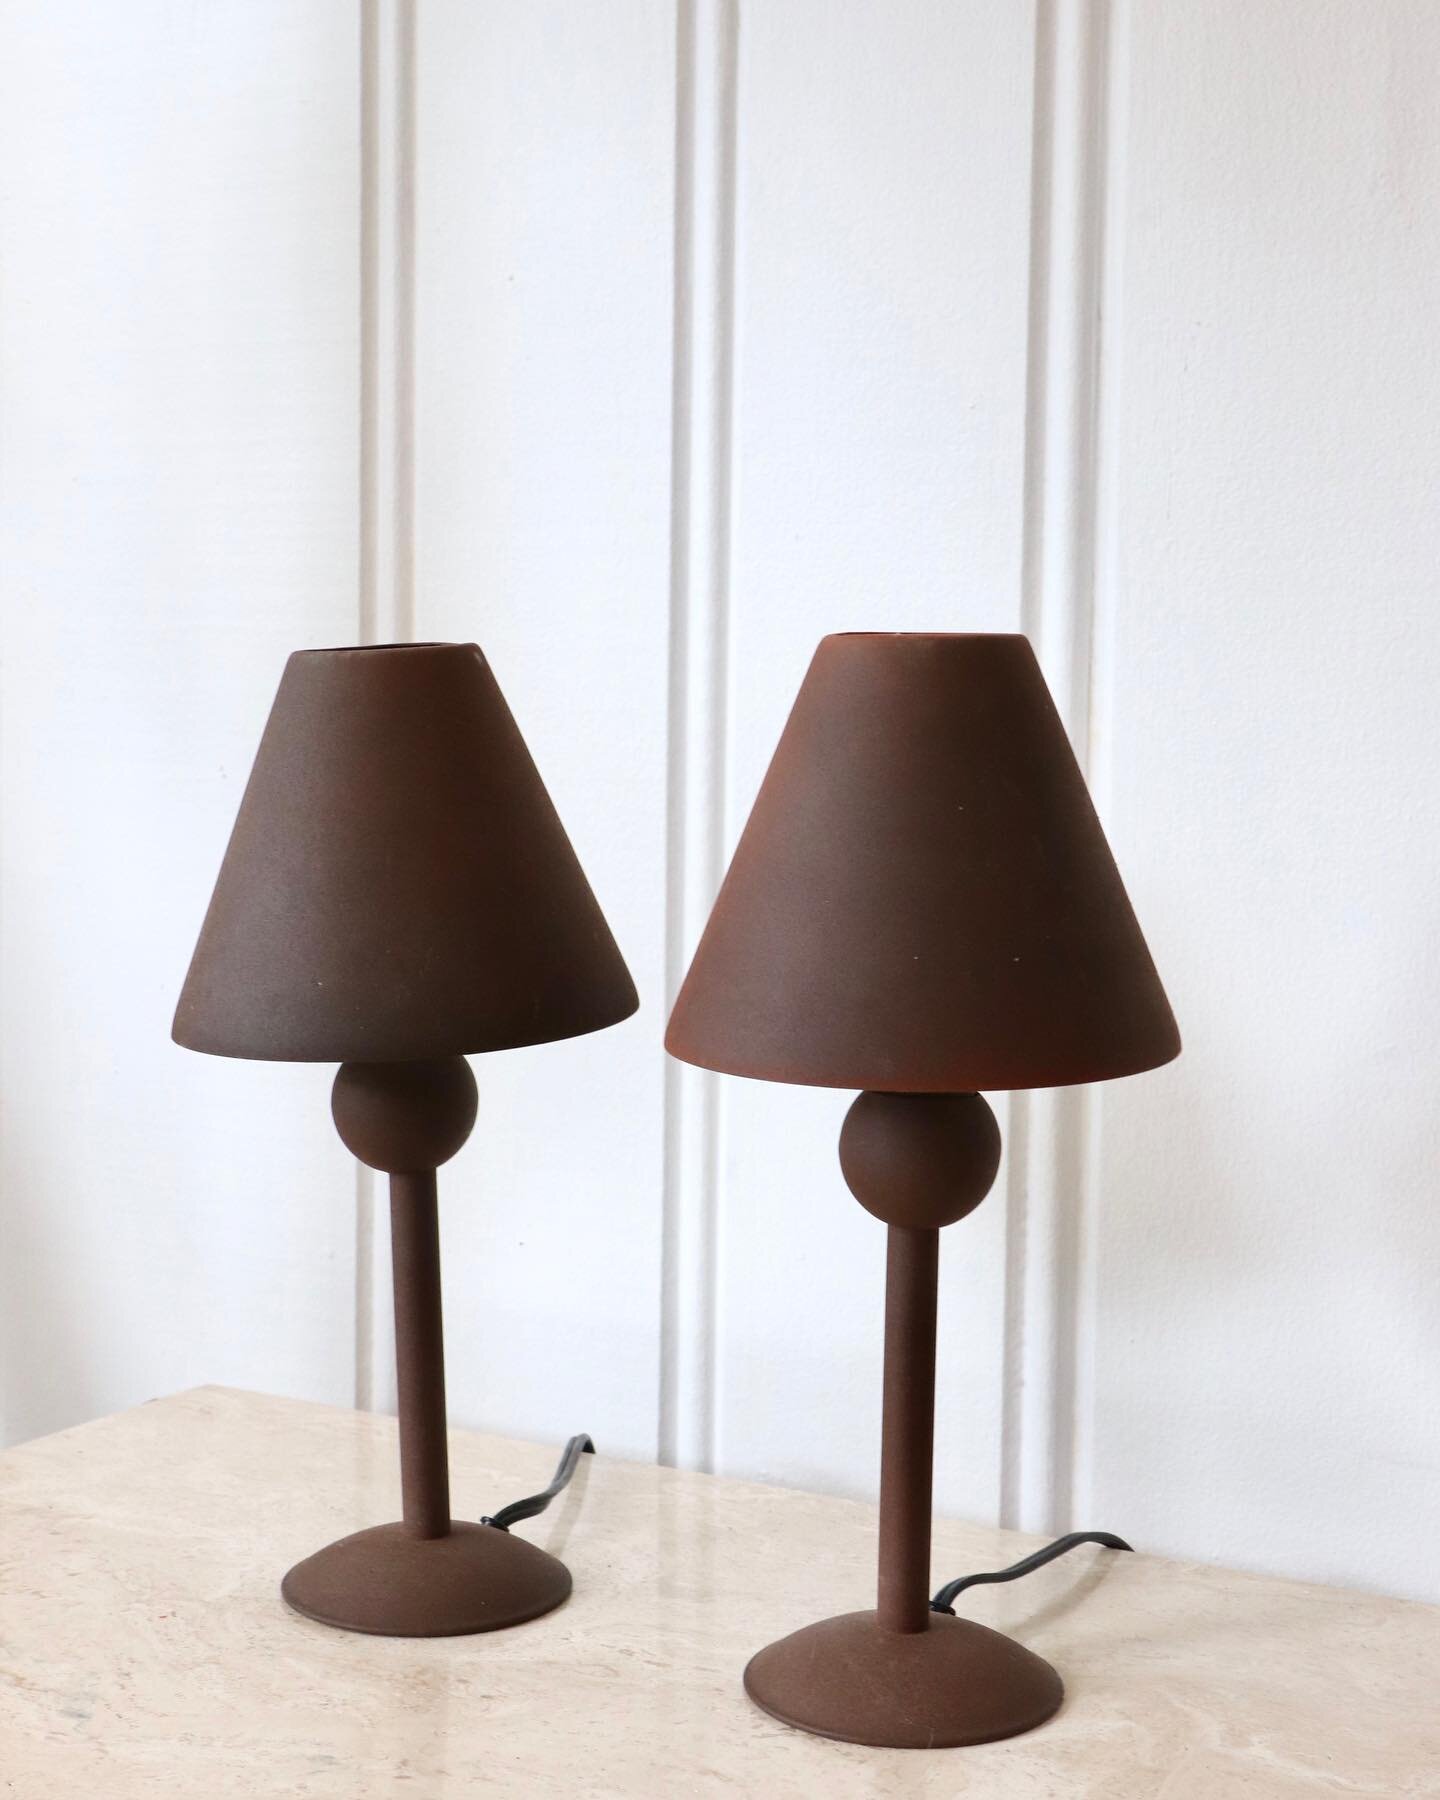 SOLD (presale) Pair of vintage metal tiny lamps. 

#interiordesign #homedecor #art #vintage